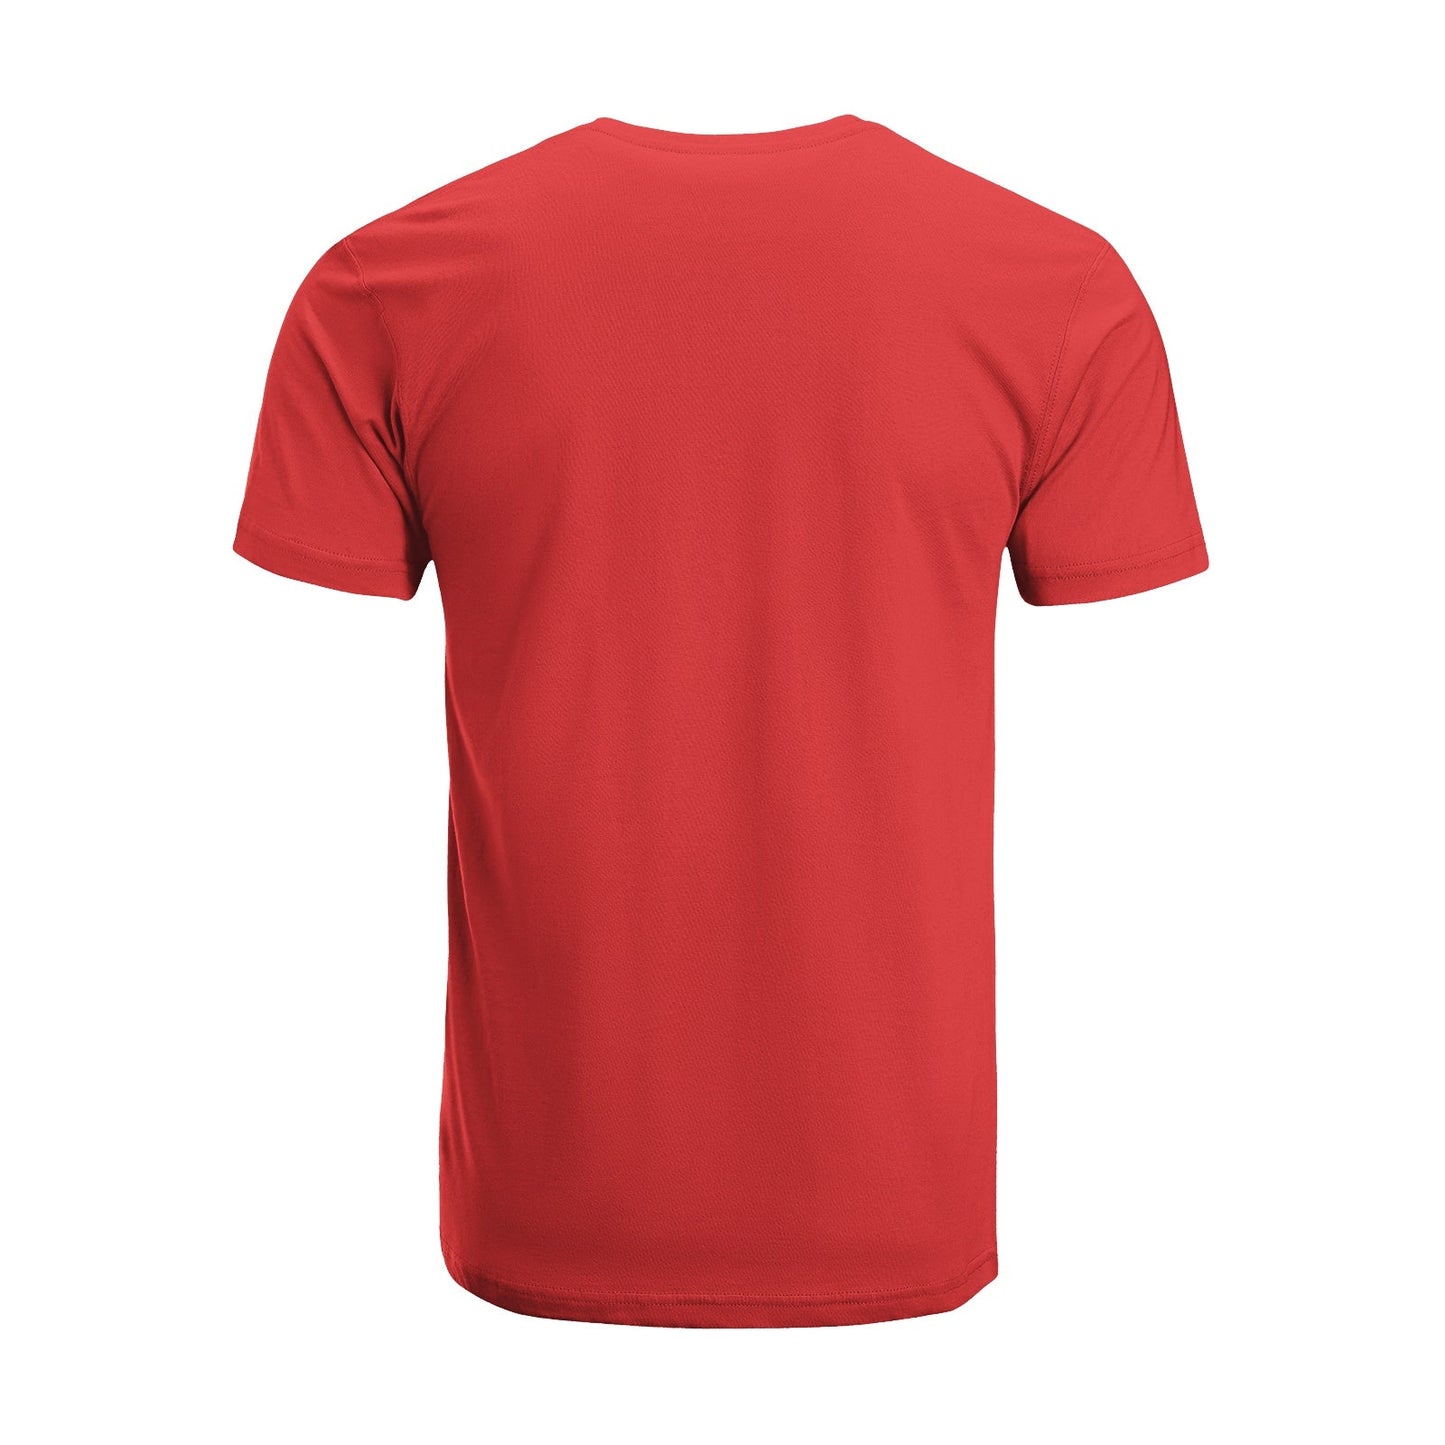 Unisex Short Sleeve Crew Neck Cotton Jersey T-Shirt MOM 50